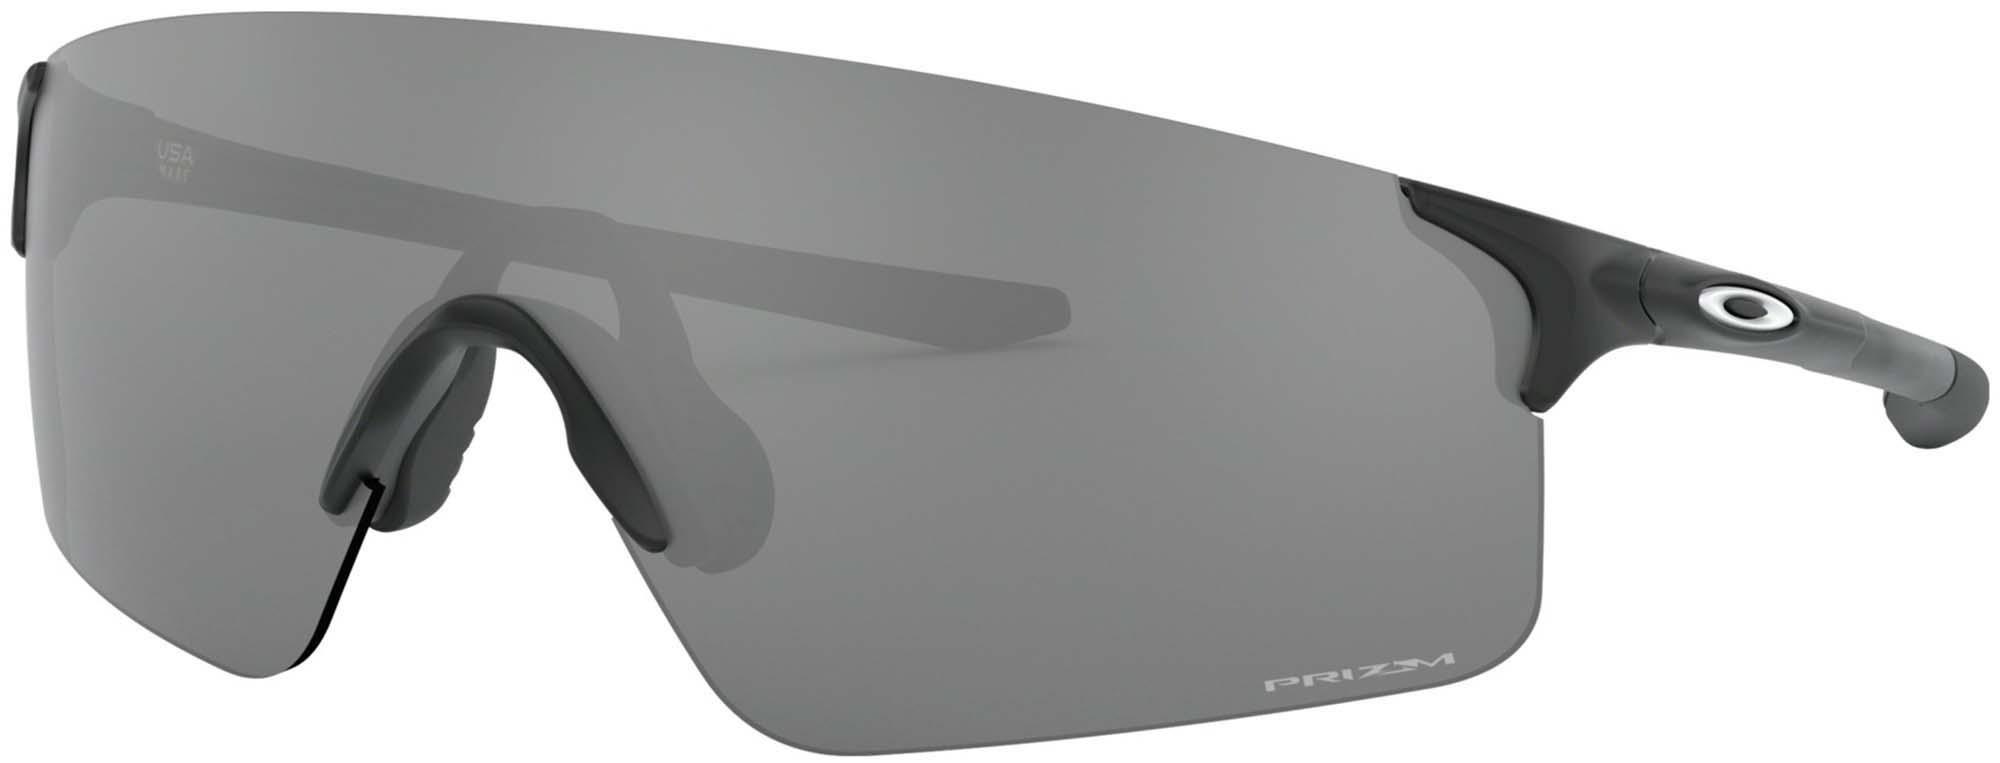 Oakley Evzero Blades Matte Black Sunglasses  Matte Black